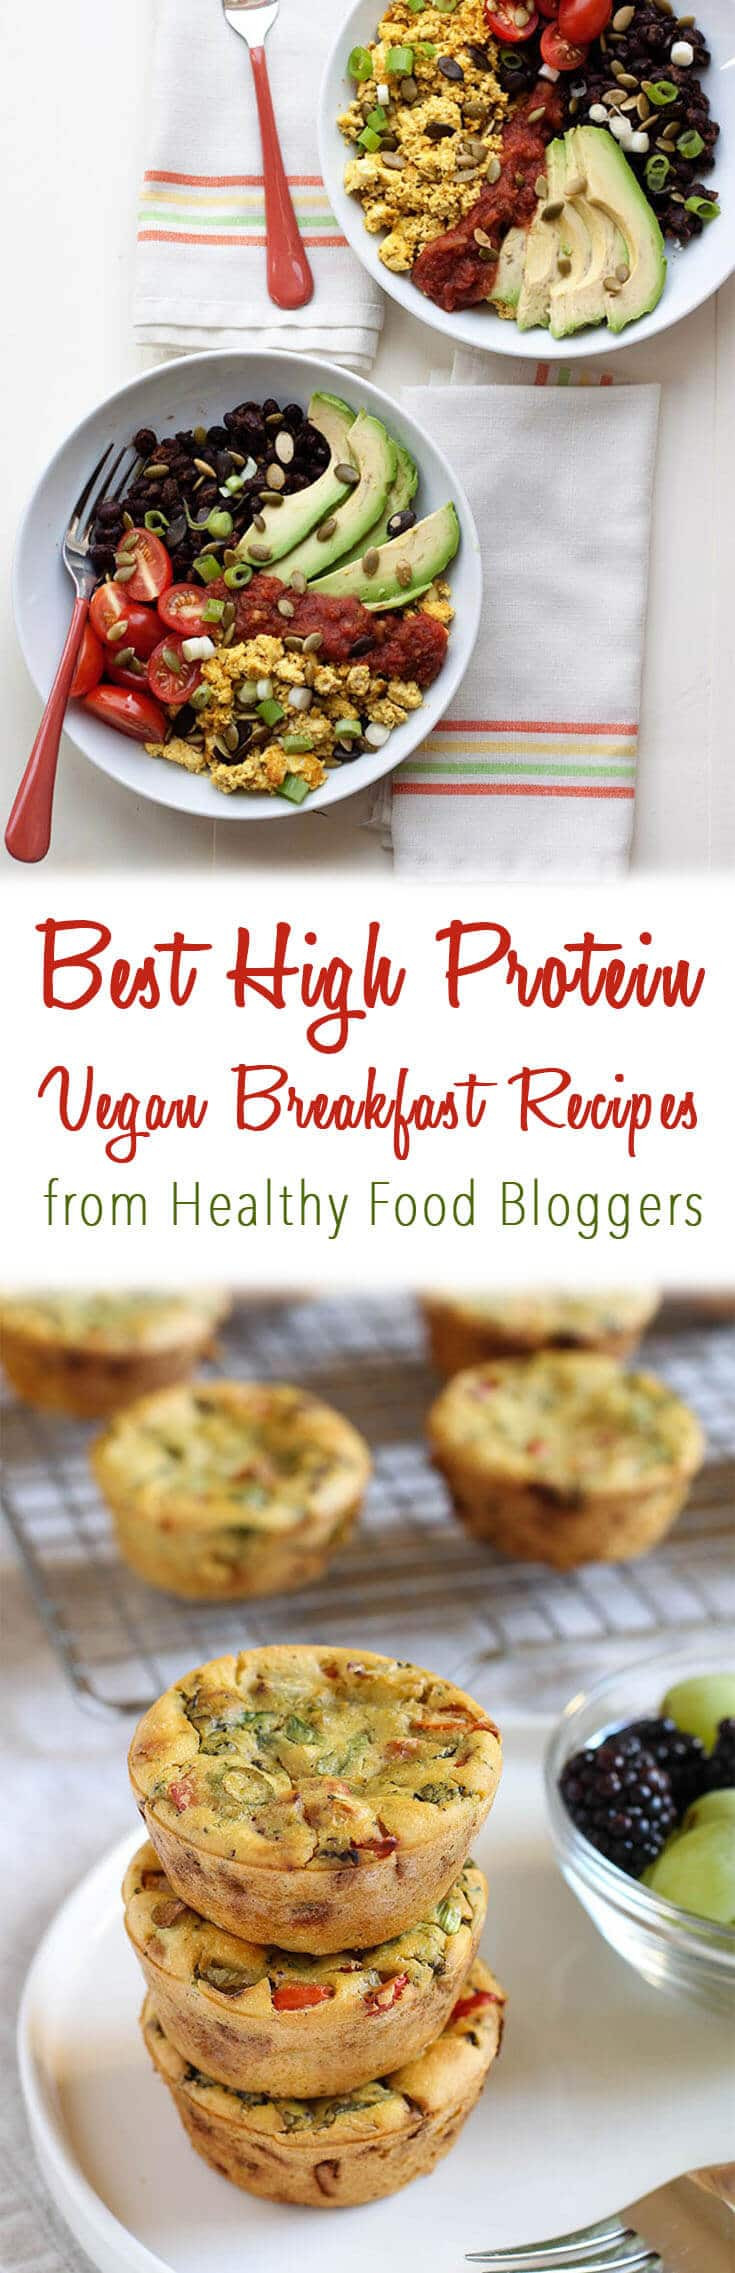 Vegan Breakfast Recipes Videos
 Best High Protein Vegan Breakfast Recipes from Healthy